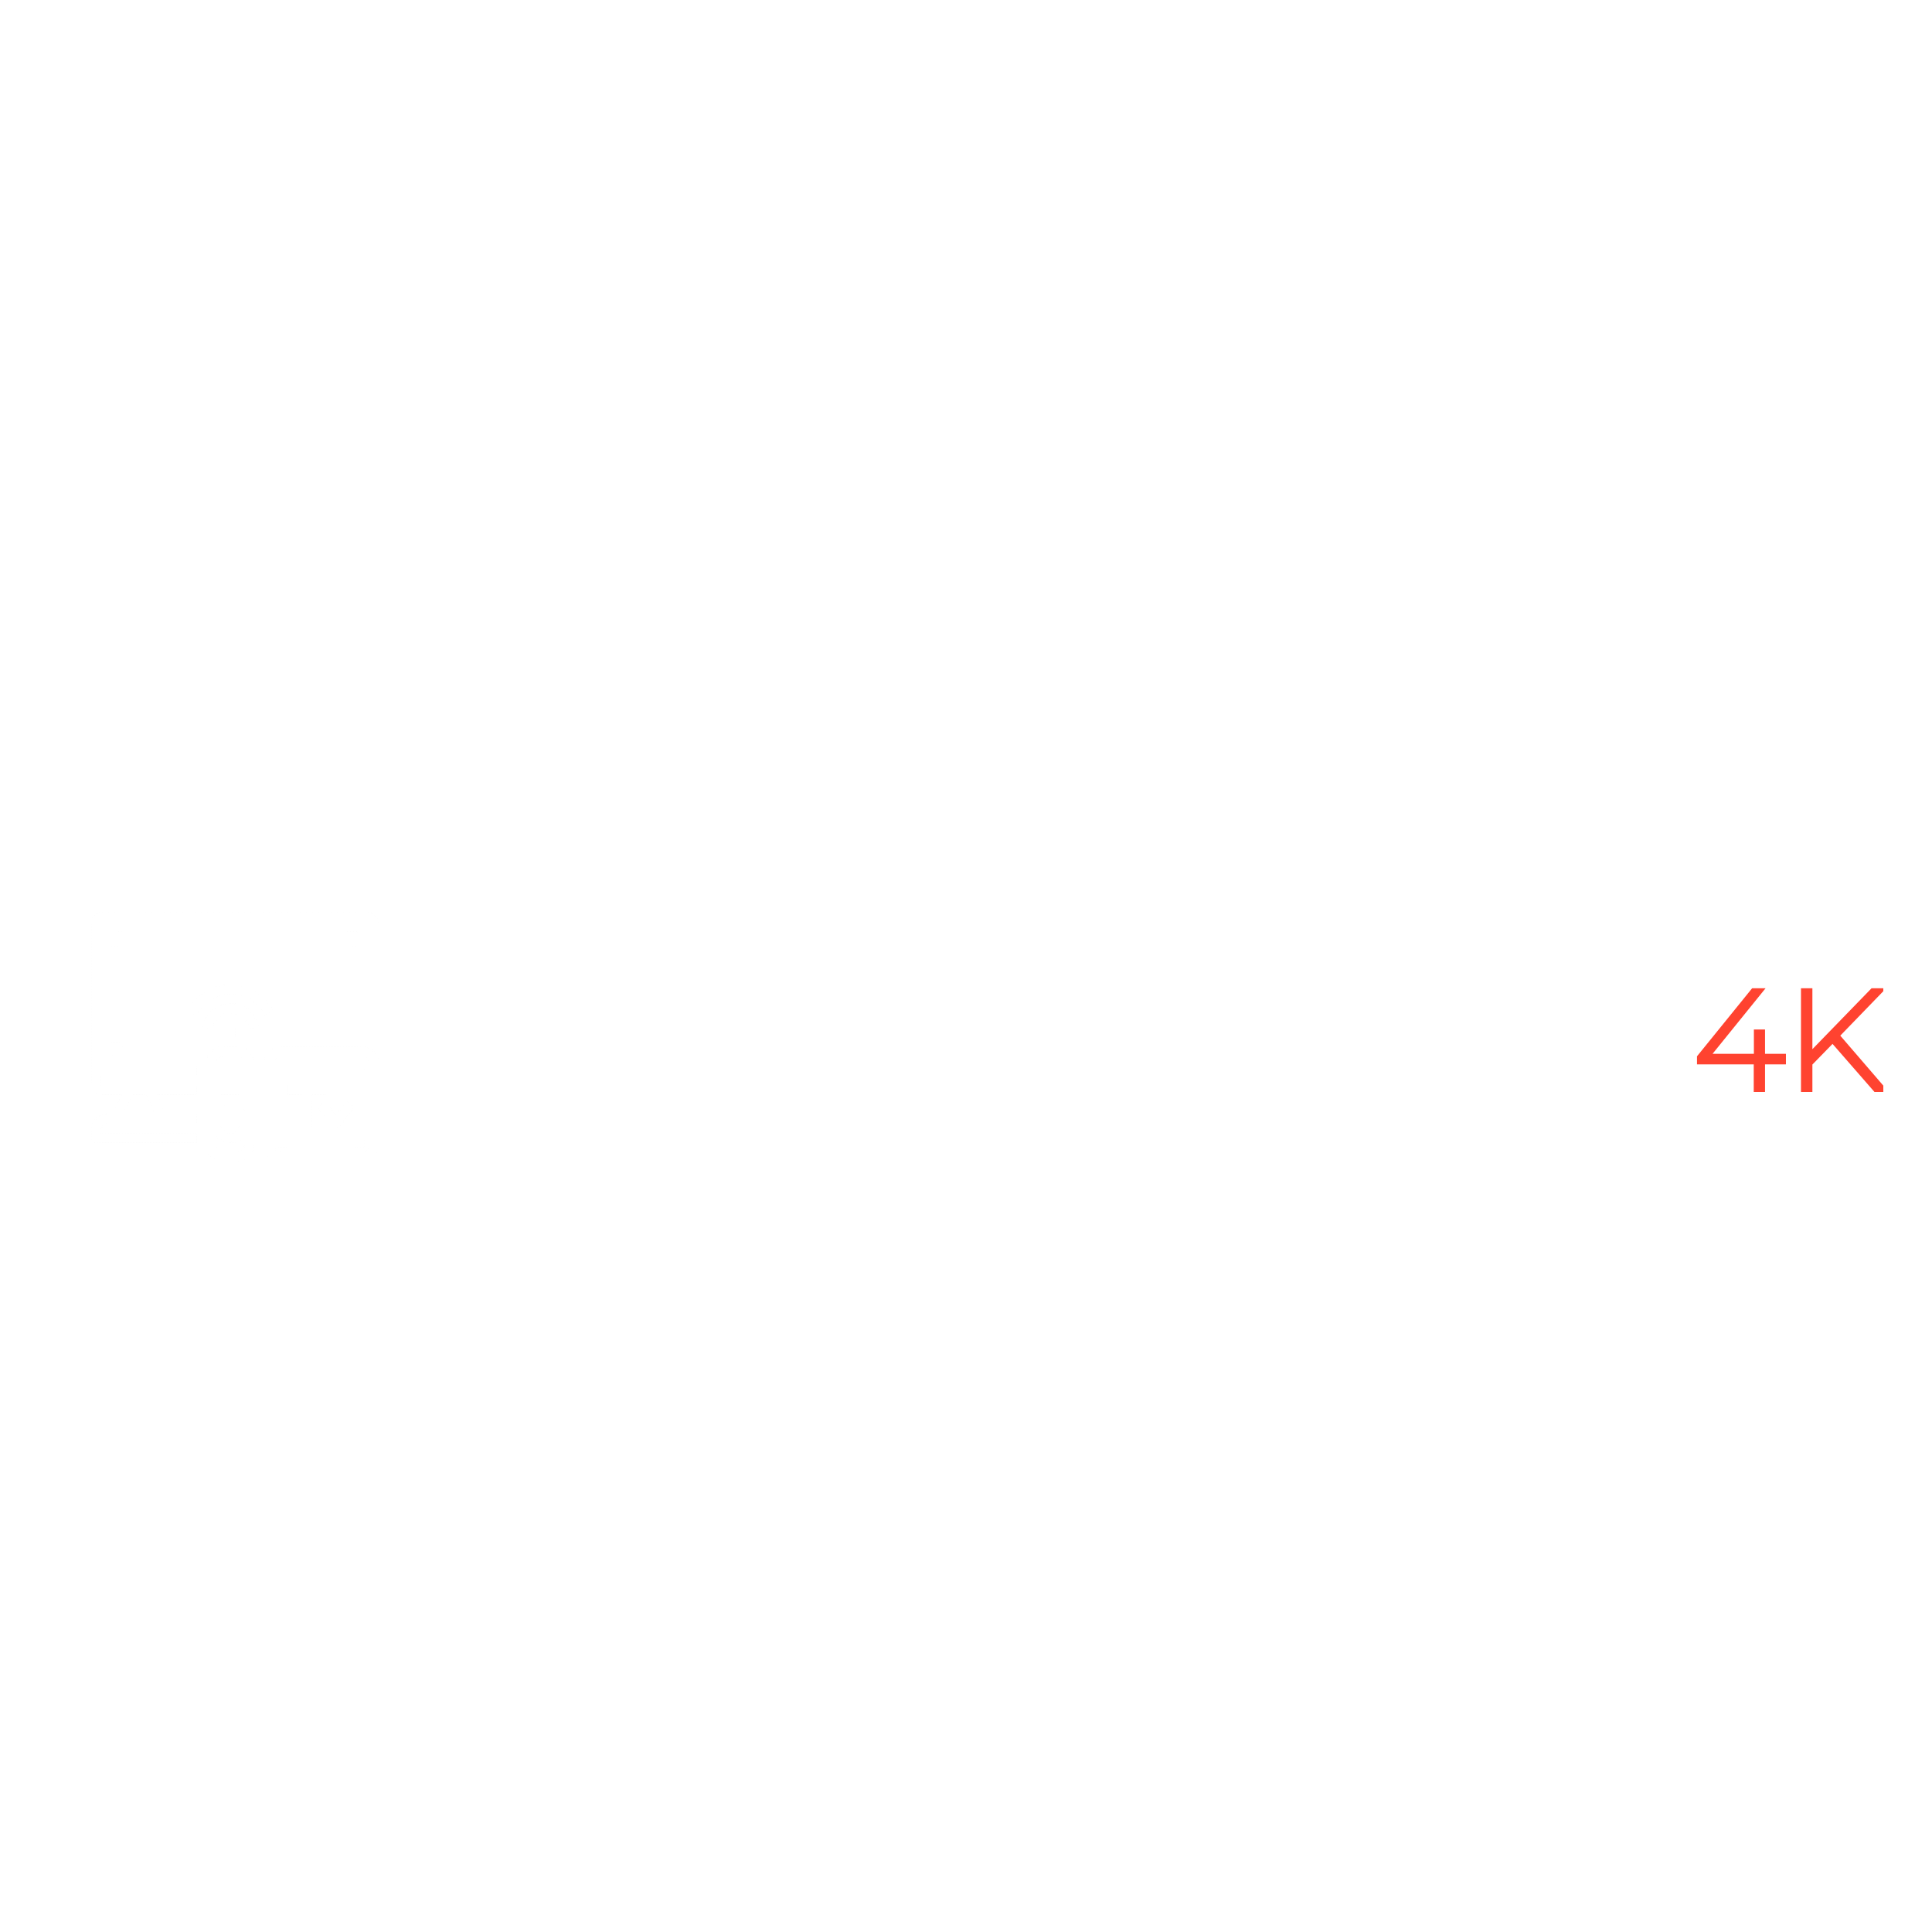 IPTV Smarters 4K